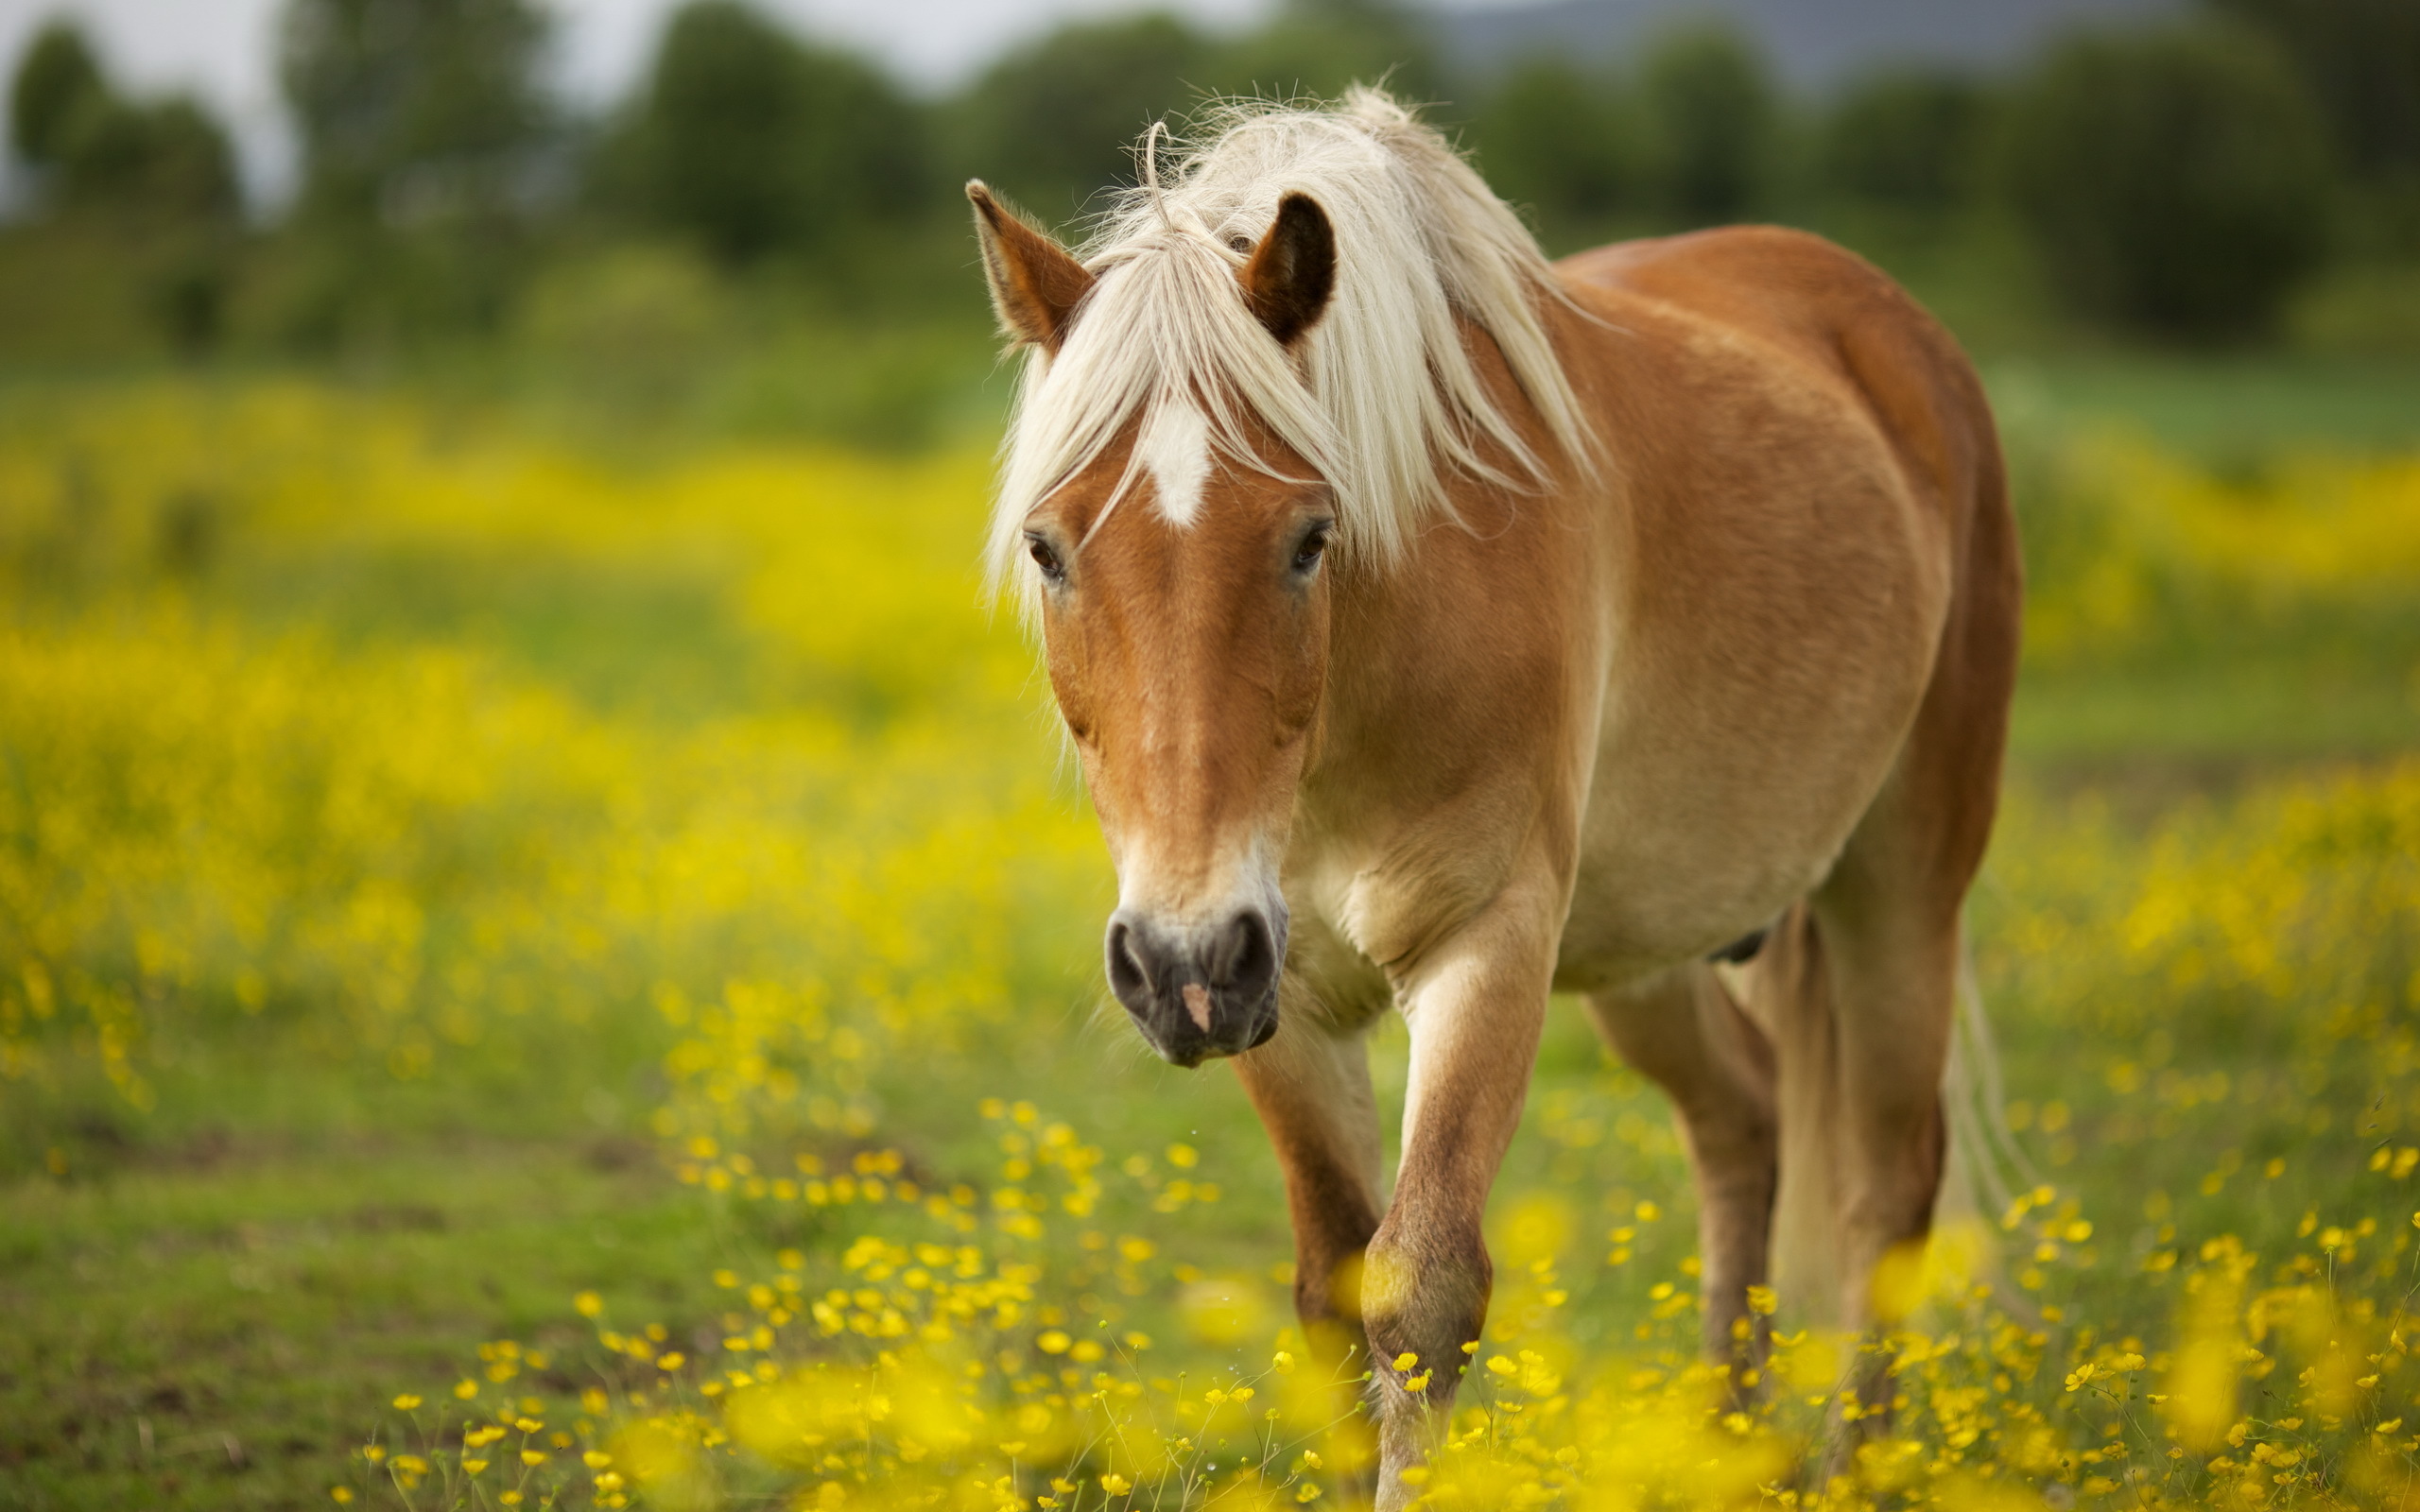 Horse pictures. Красивые лошади. Картинки лошадей. Картинки лошадей красивые. Красивый конь.